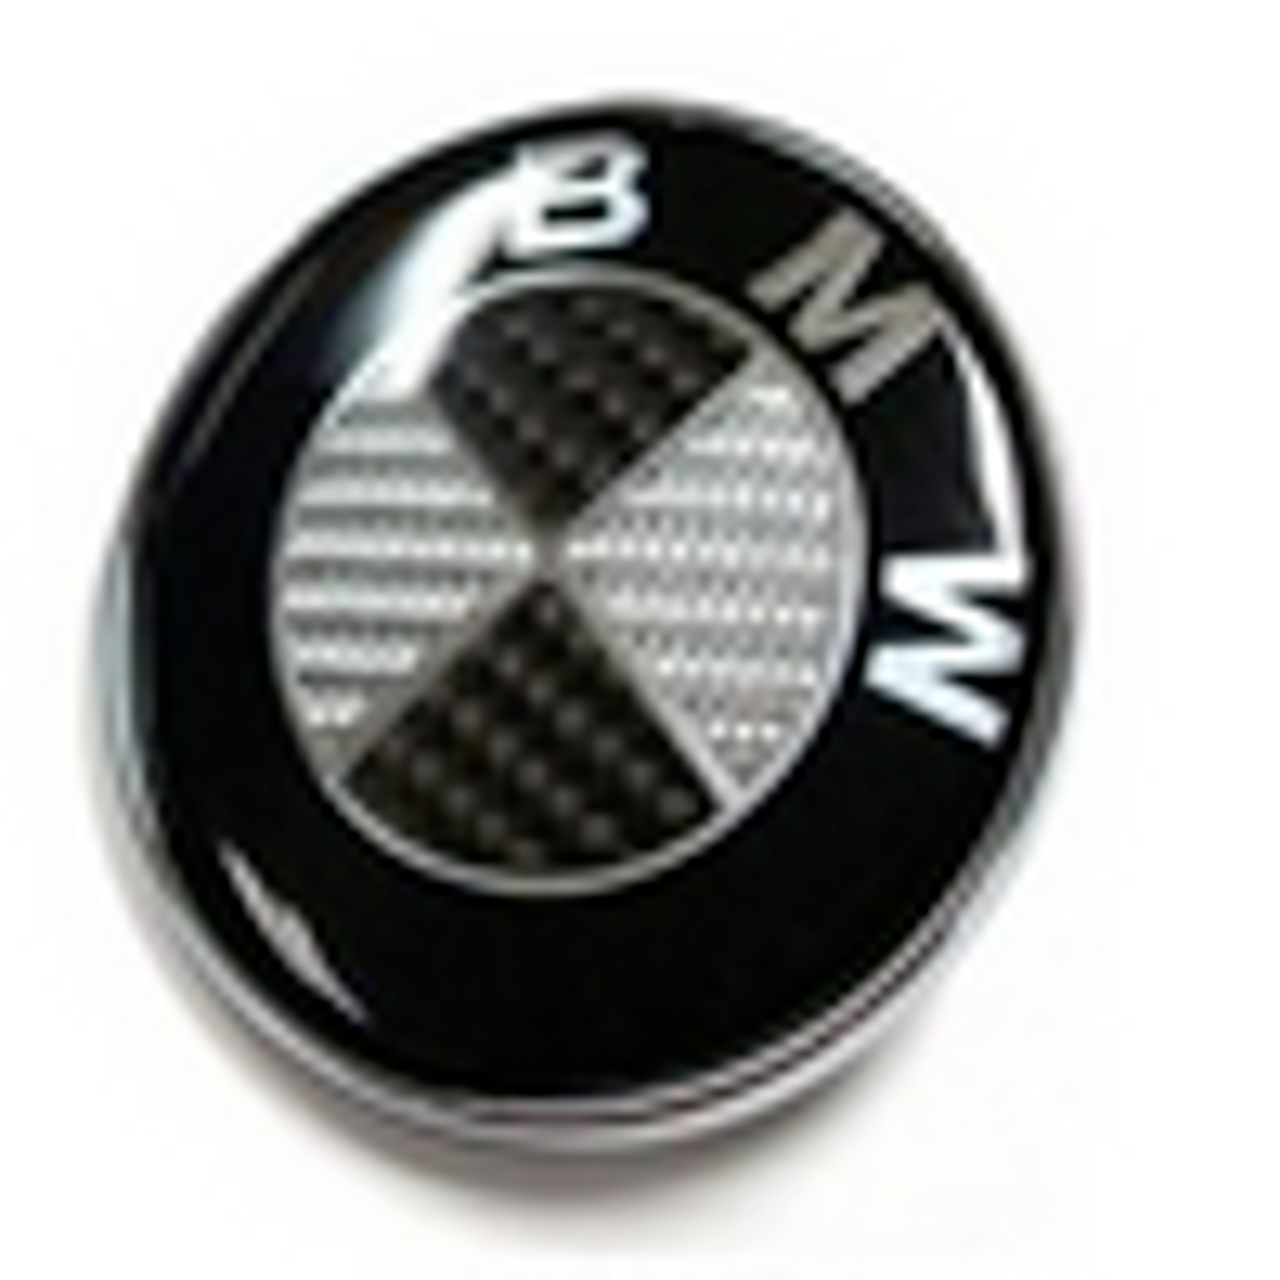 Stickers BMW Logo - Autocollant voiture